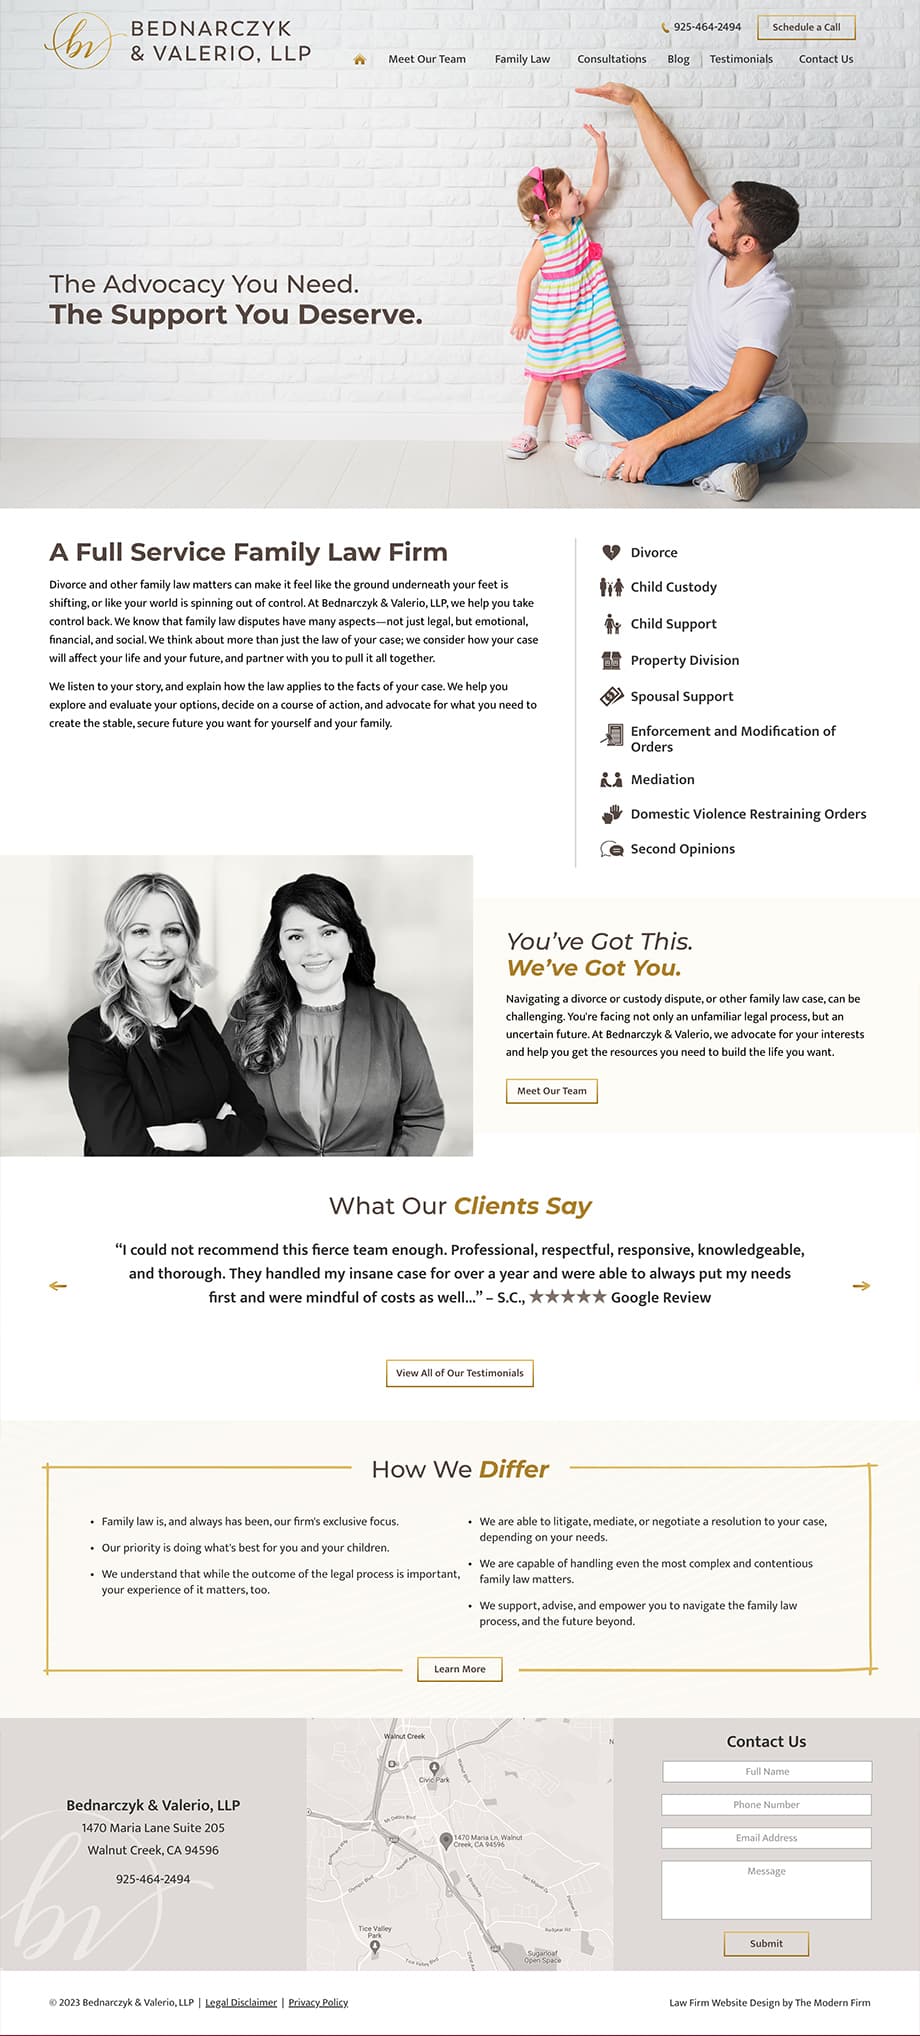 Law Firm Website Design for Bednarczyk & Valerio, LLP